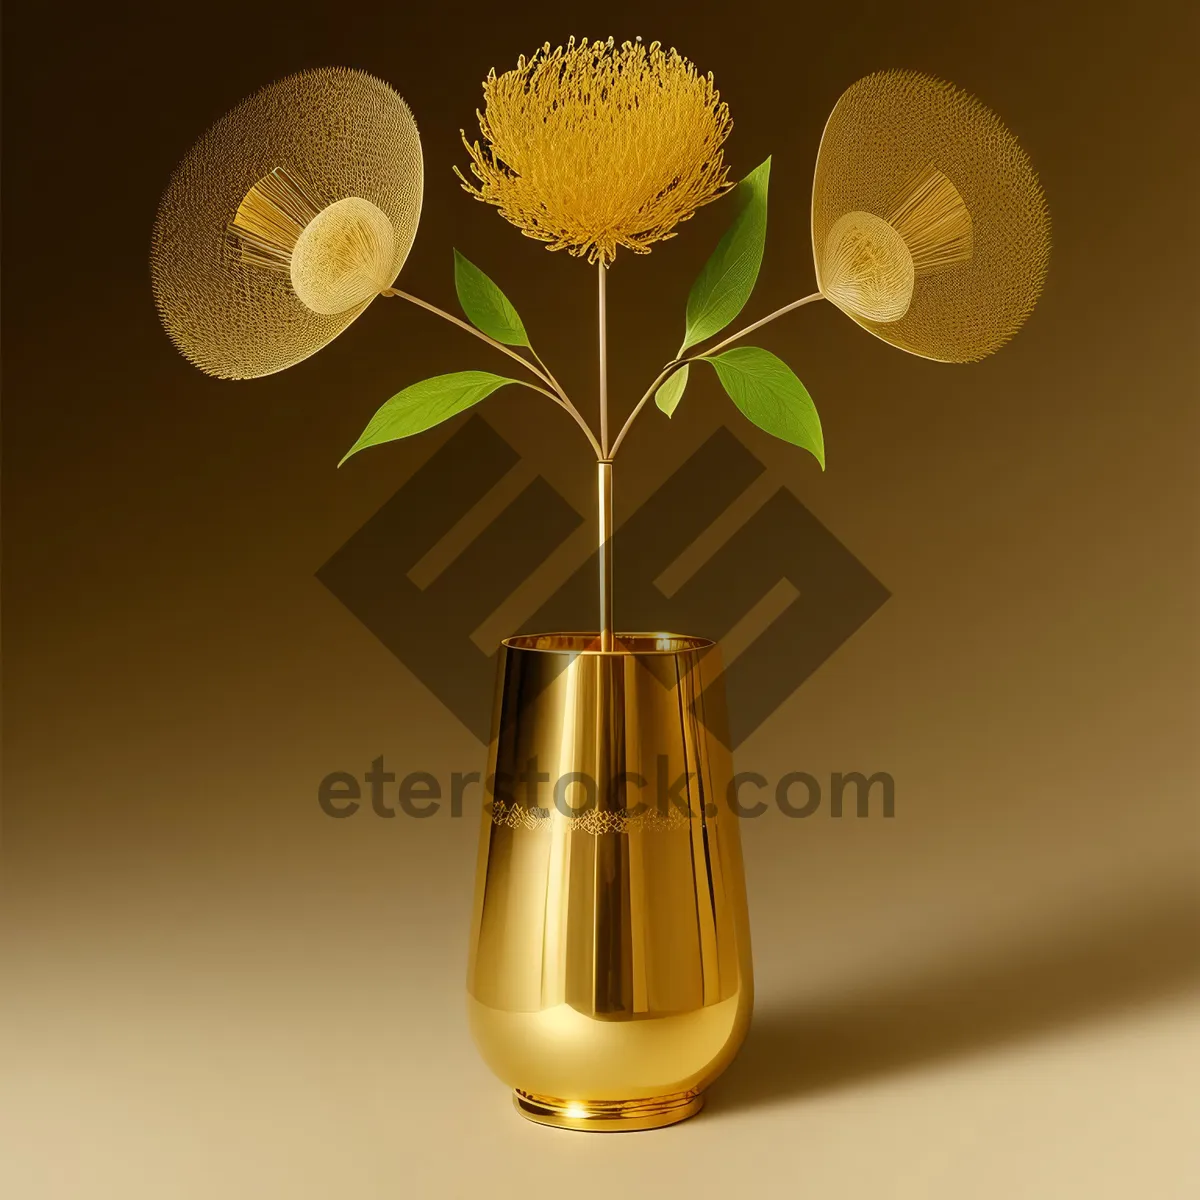 Picture of Sparkling Champagne in Elegant Glass Vase